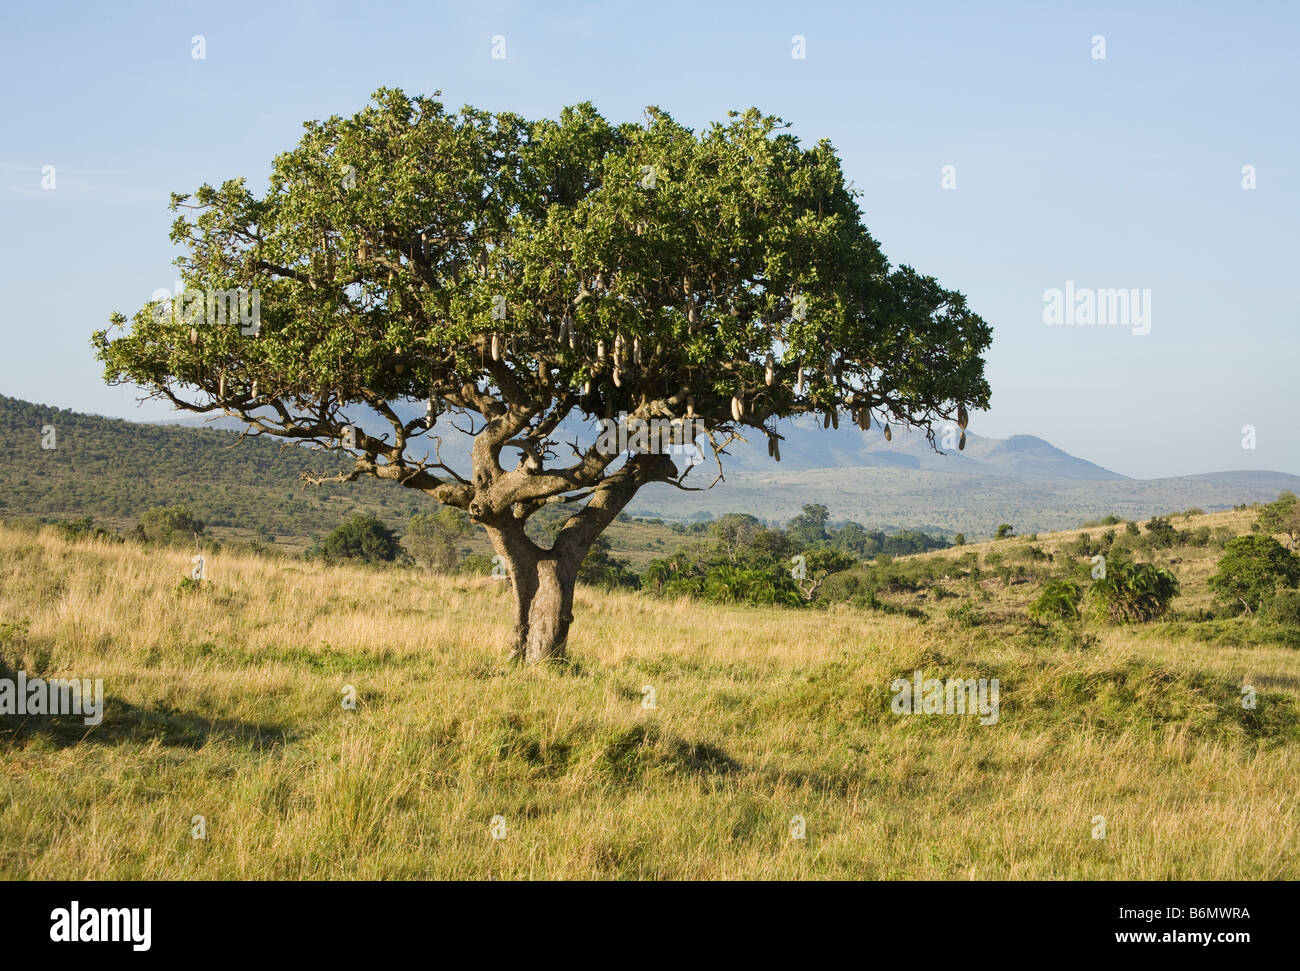 A Sausage Tree in the Masai Mara in Kenya Stock Photo